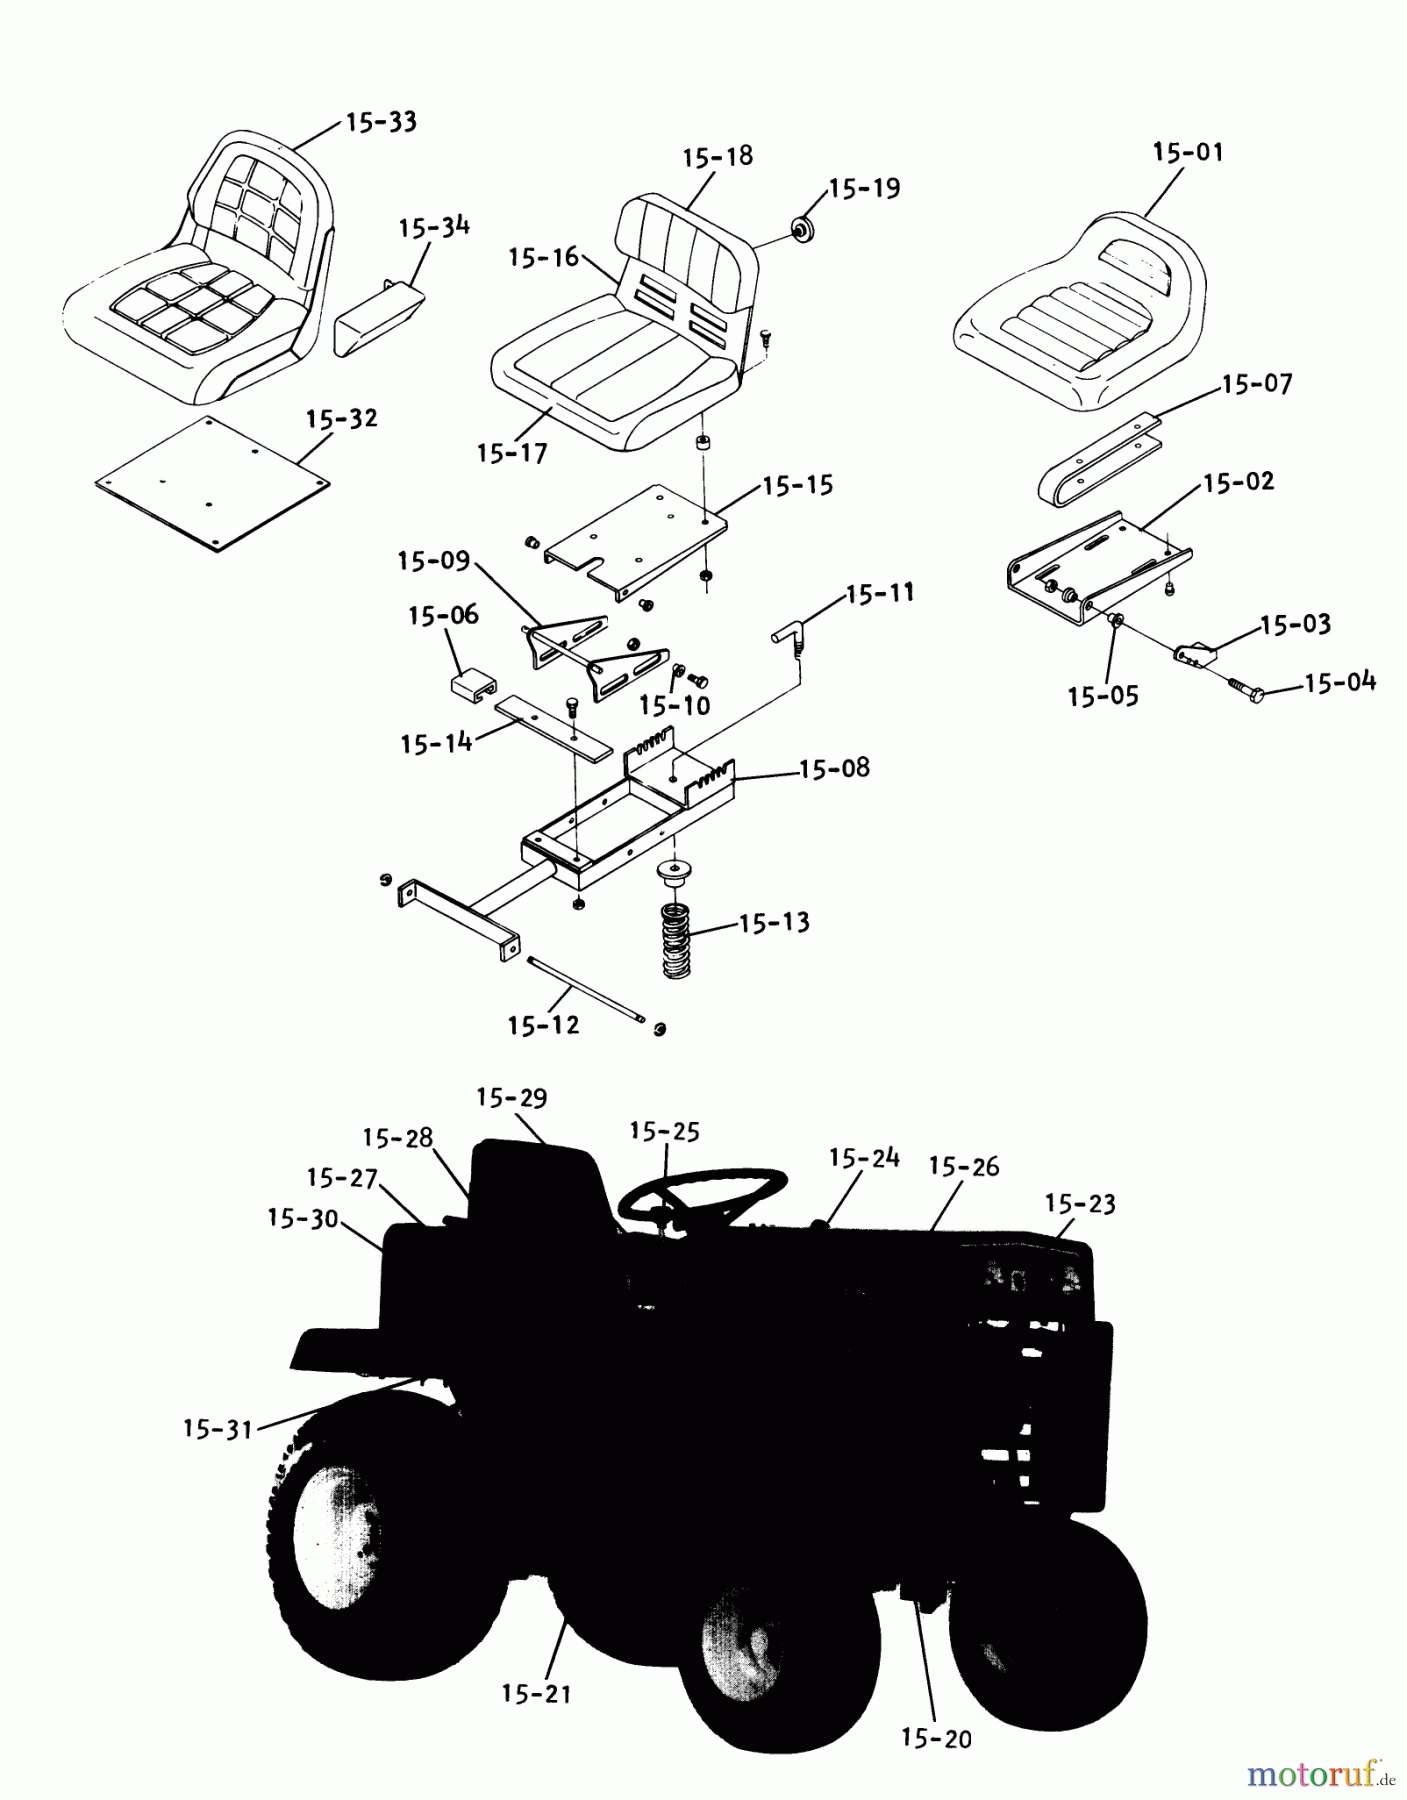  Toro Neu Mowers, Lawn & Garden Tractor Seite 1 1-0612 (D-180) - Toro D-180 Automatic Tractor, 1975 14.040 REAR POWER TAKE-OFF (FIG. 14B) #2